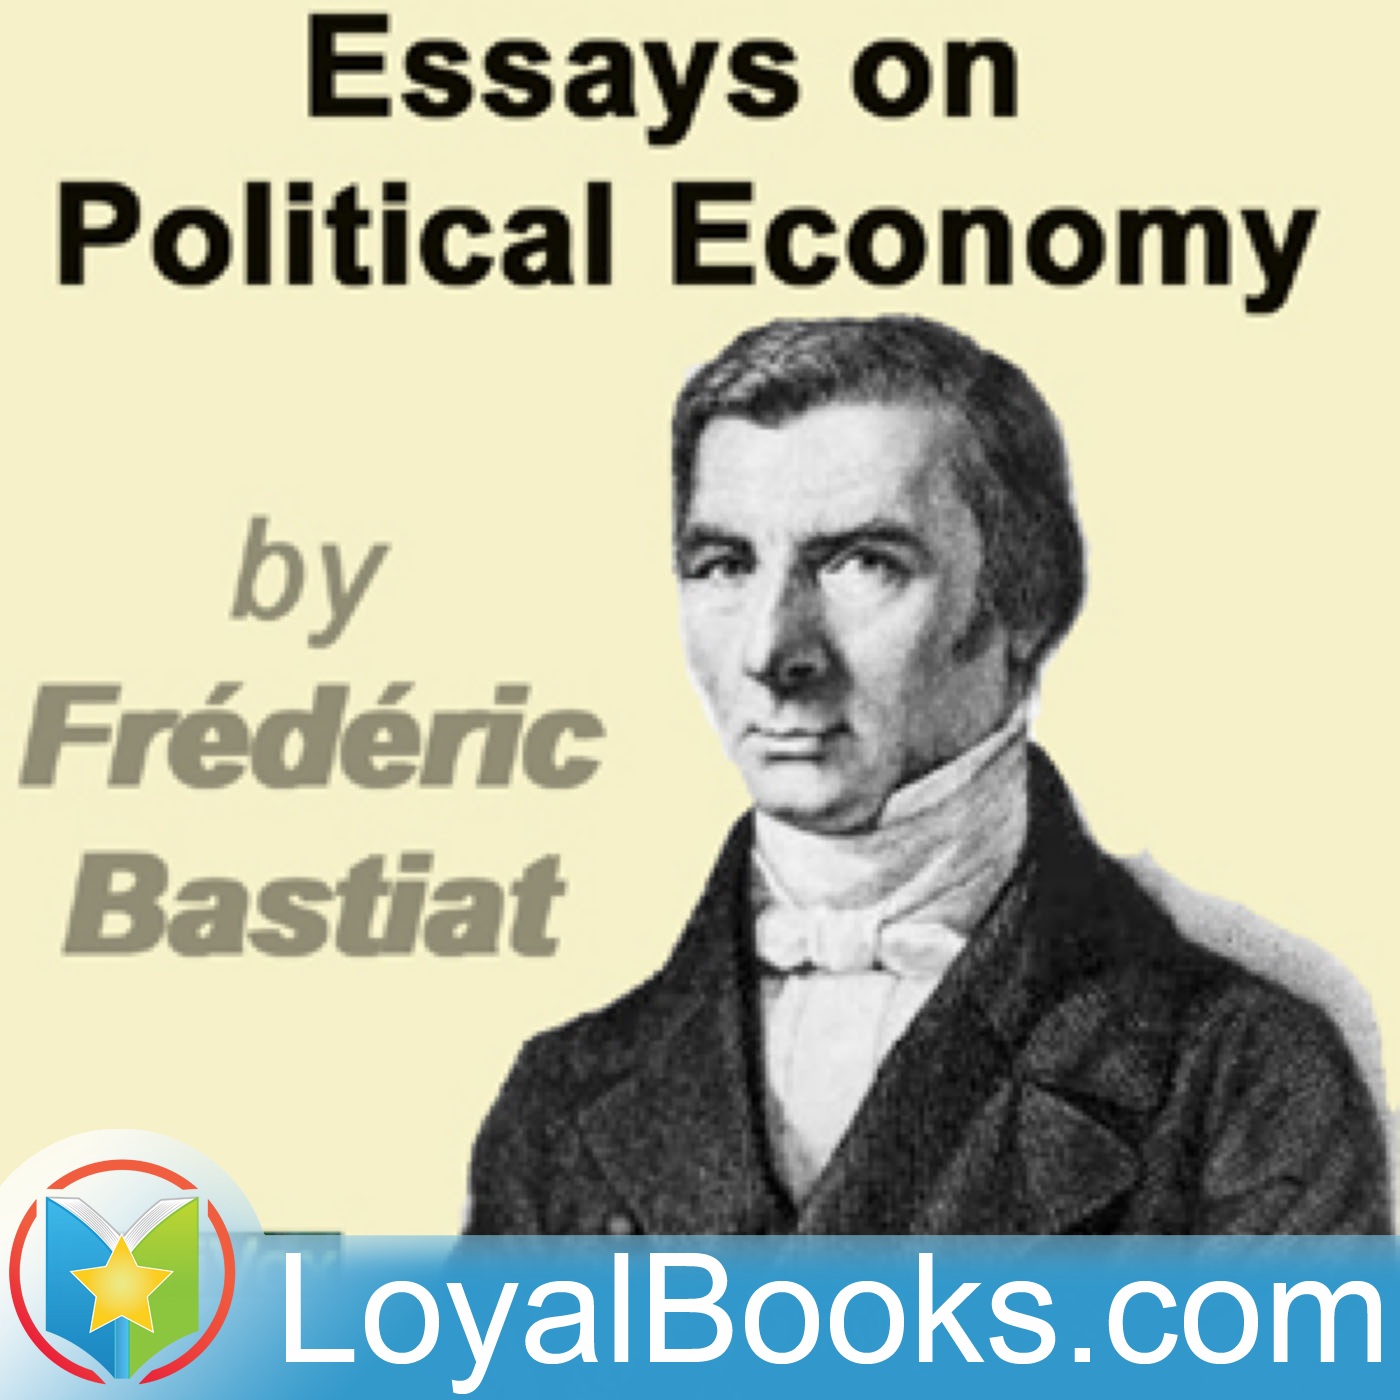 Essays on Political Economy by Frederic Bastiat